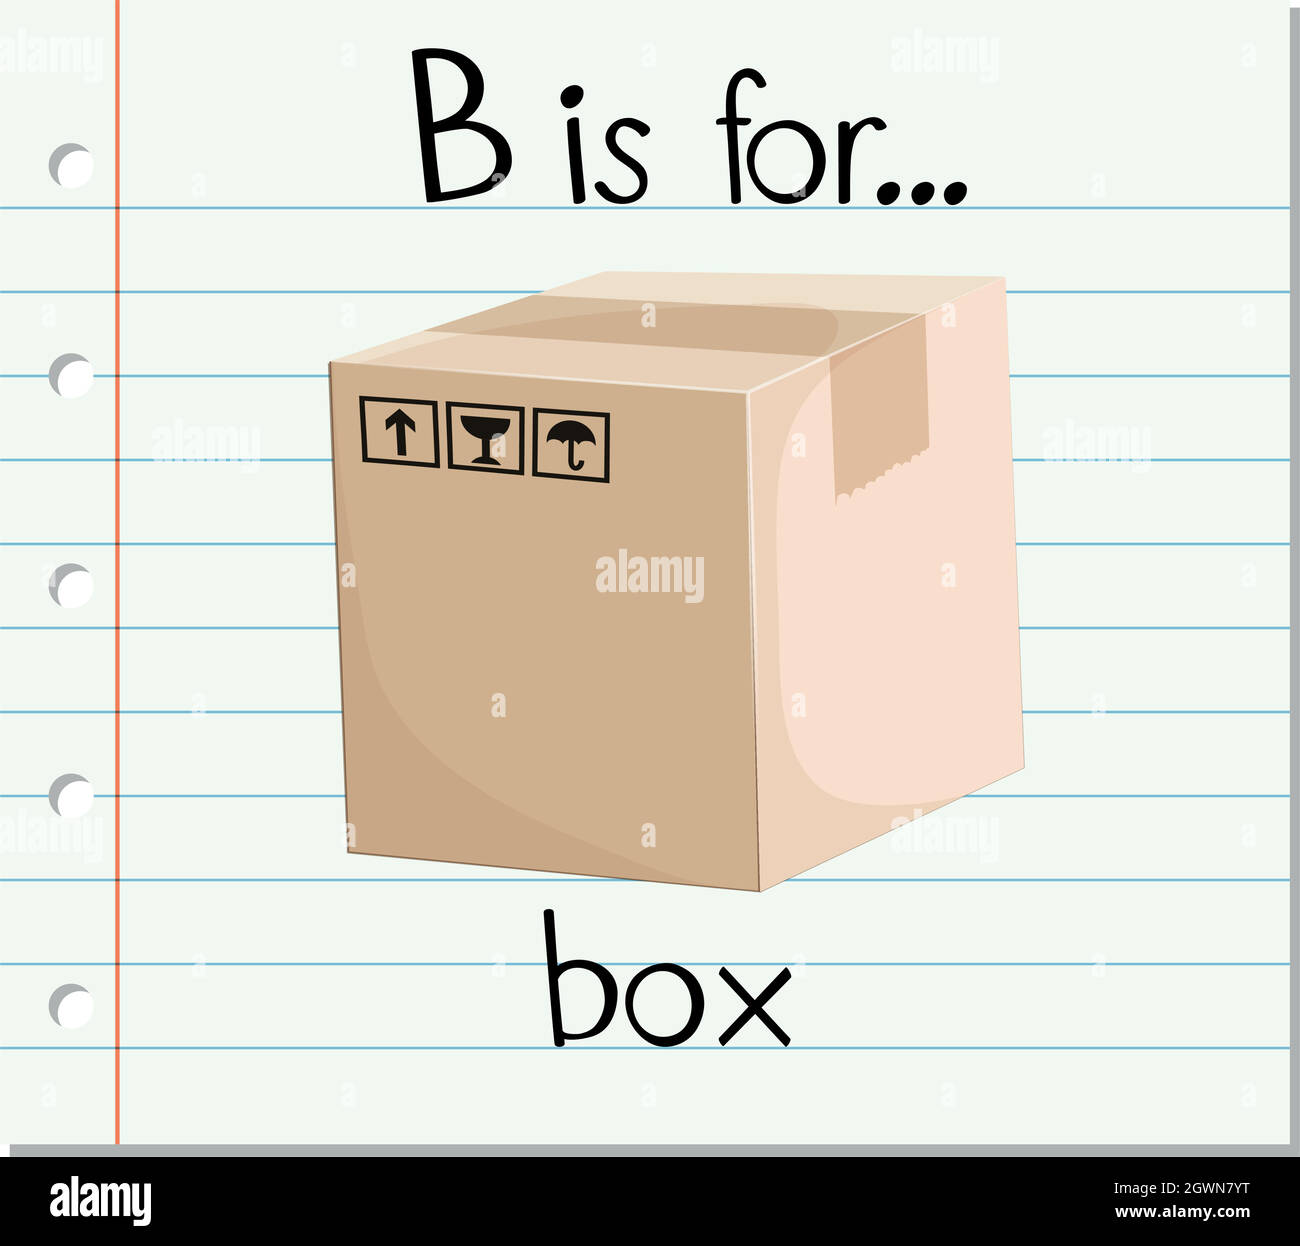 https://c8.alamy.com/comp/2GWN7YT/flashcard-letter-b-is-for-box-2GWN7YT.jpg